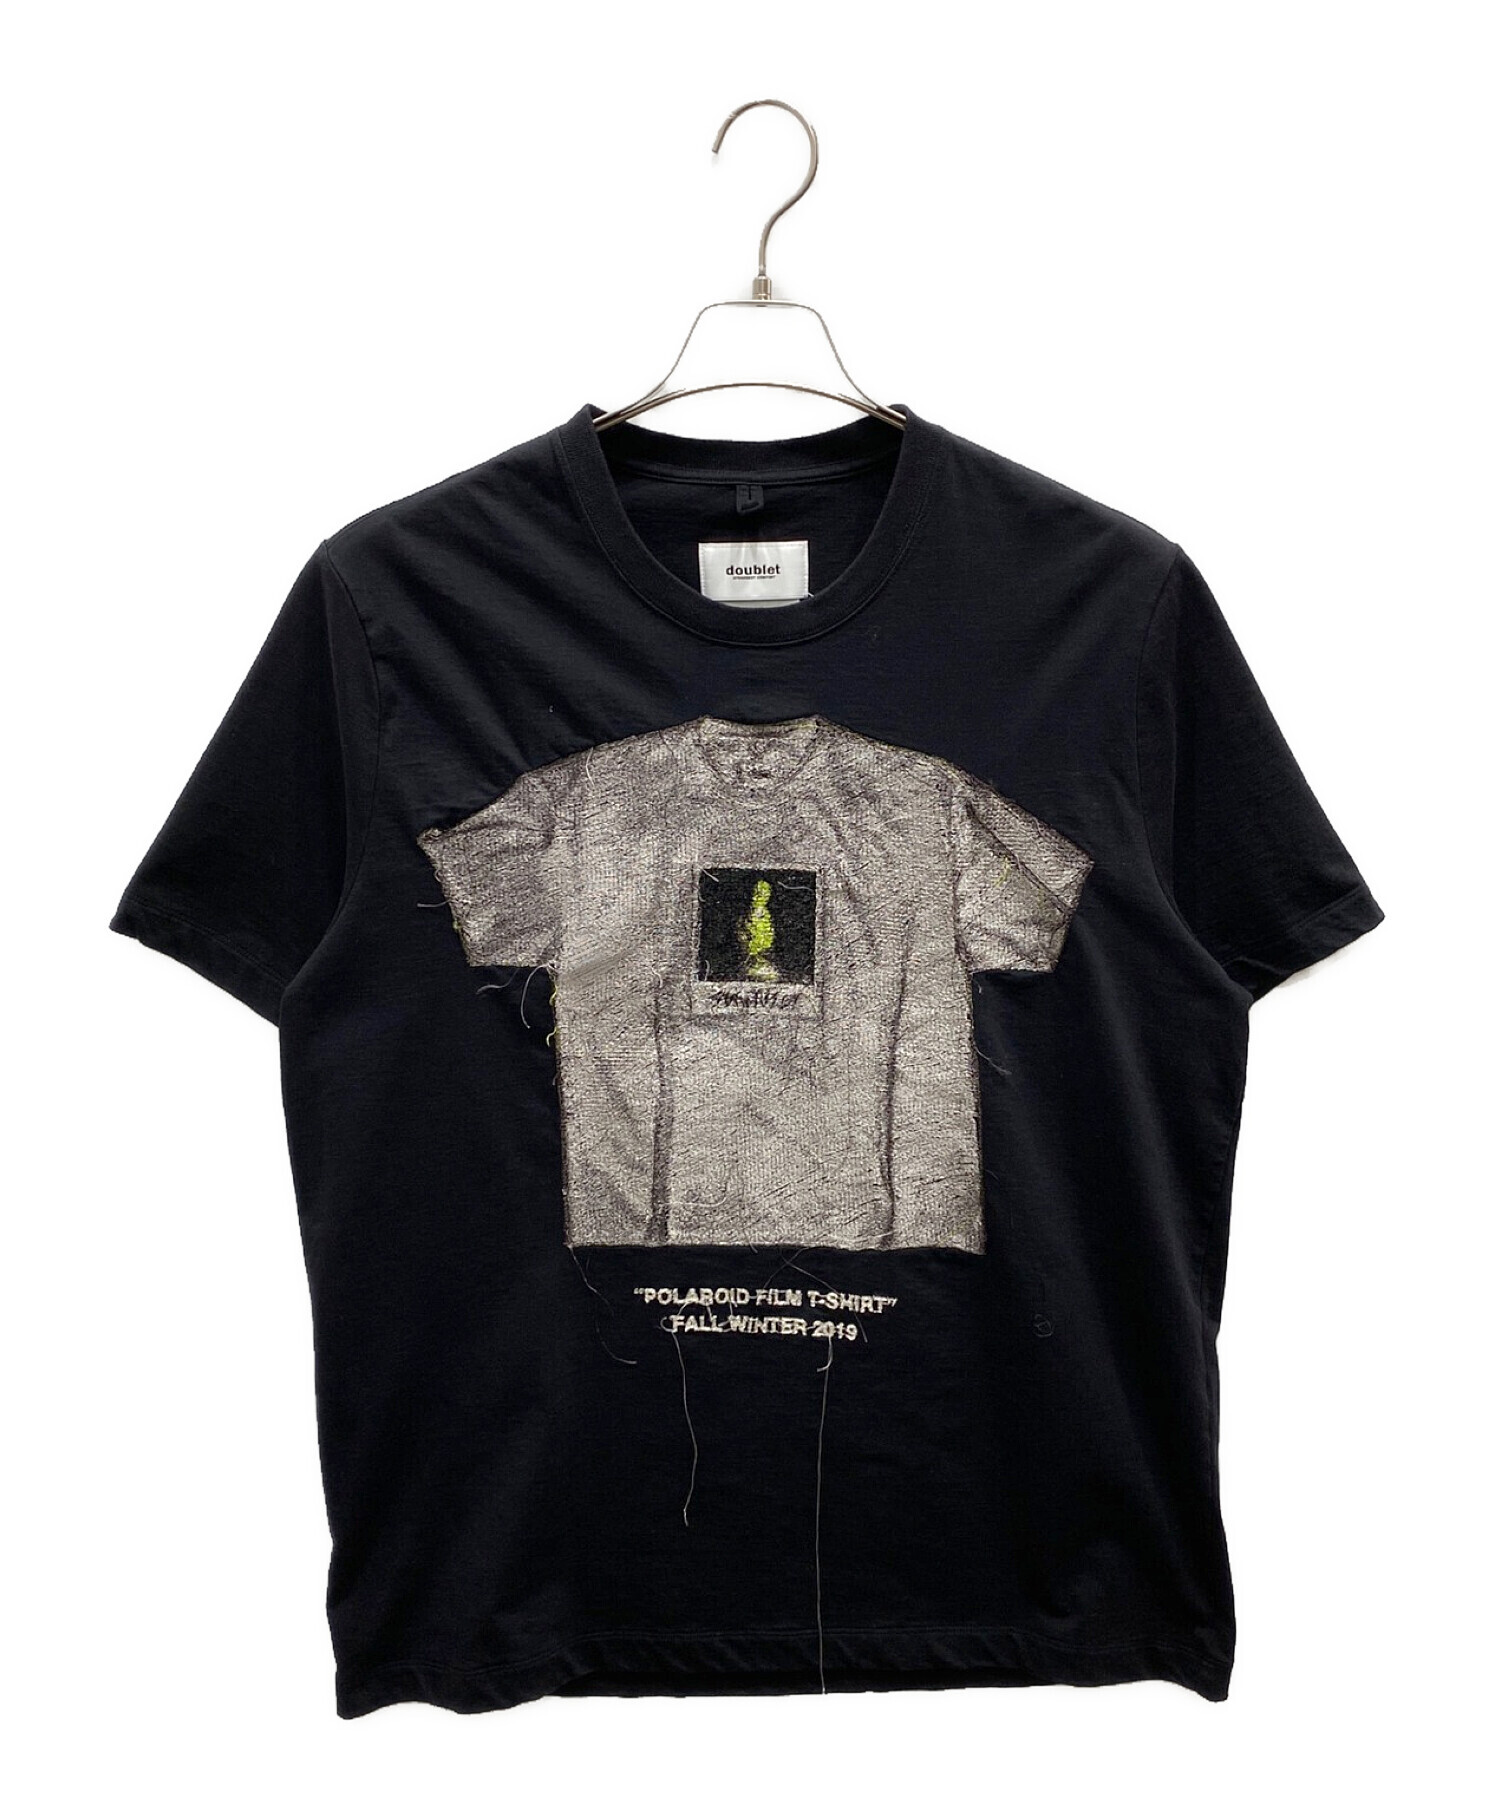 doublet T-SHIRT DOVER STREET MARKET 新品 - Tシャツ/カットソー(半袖